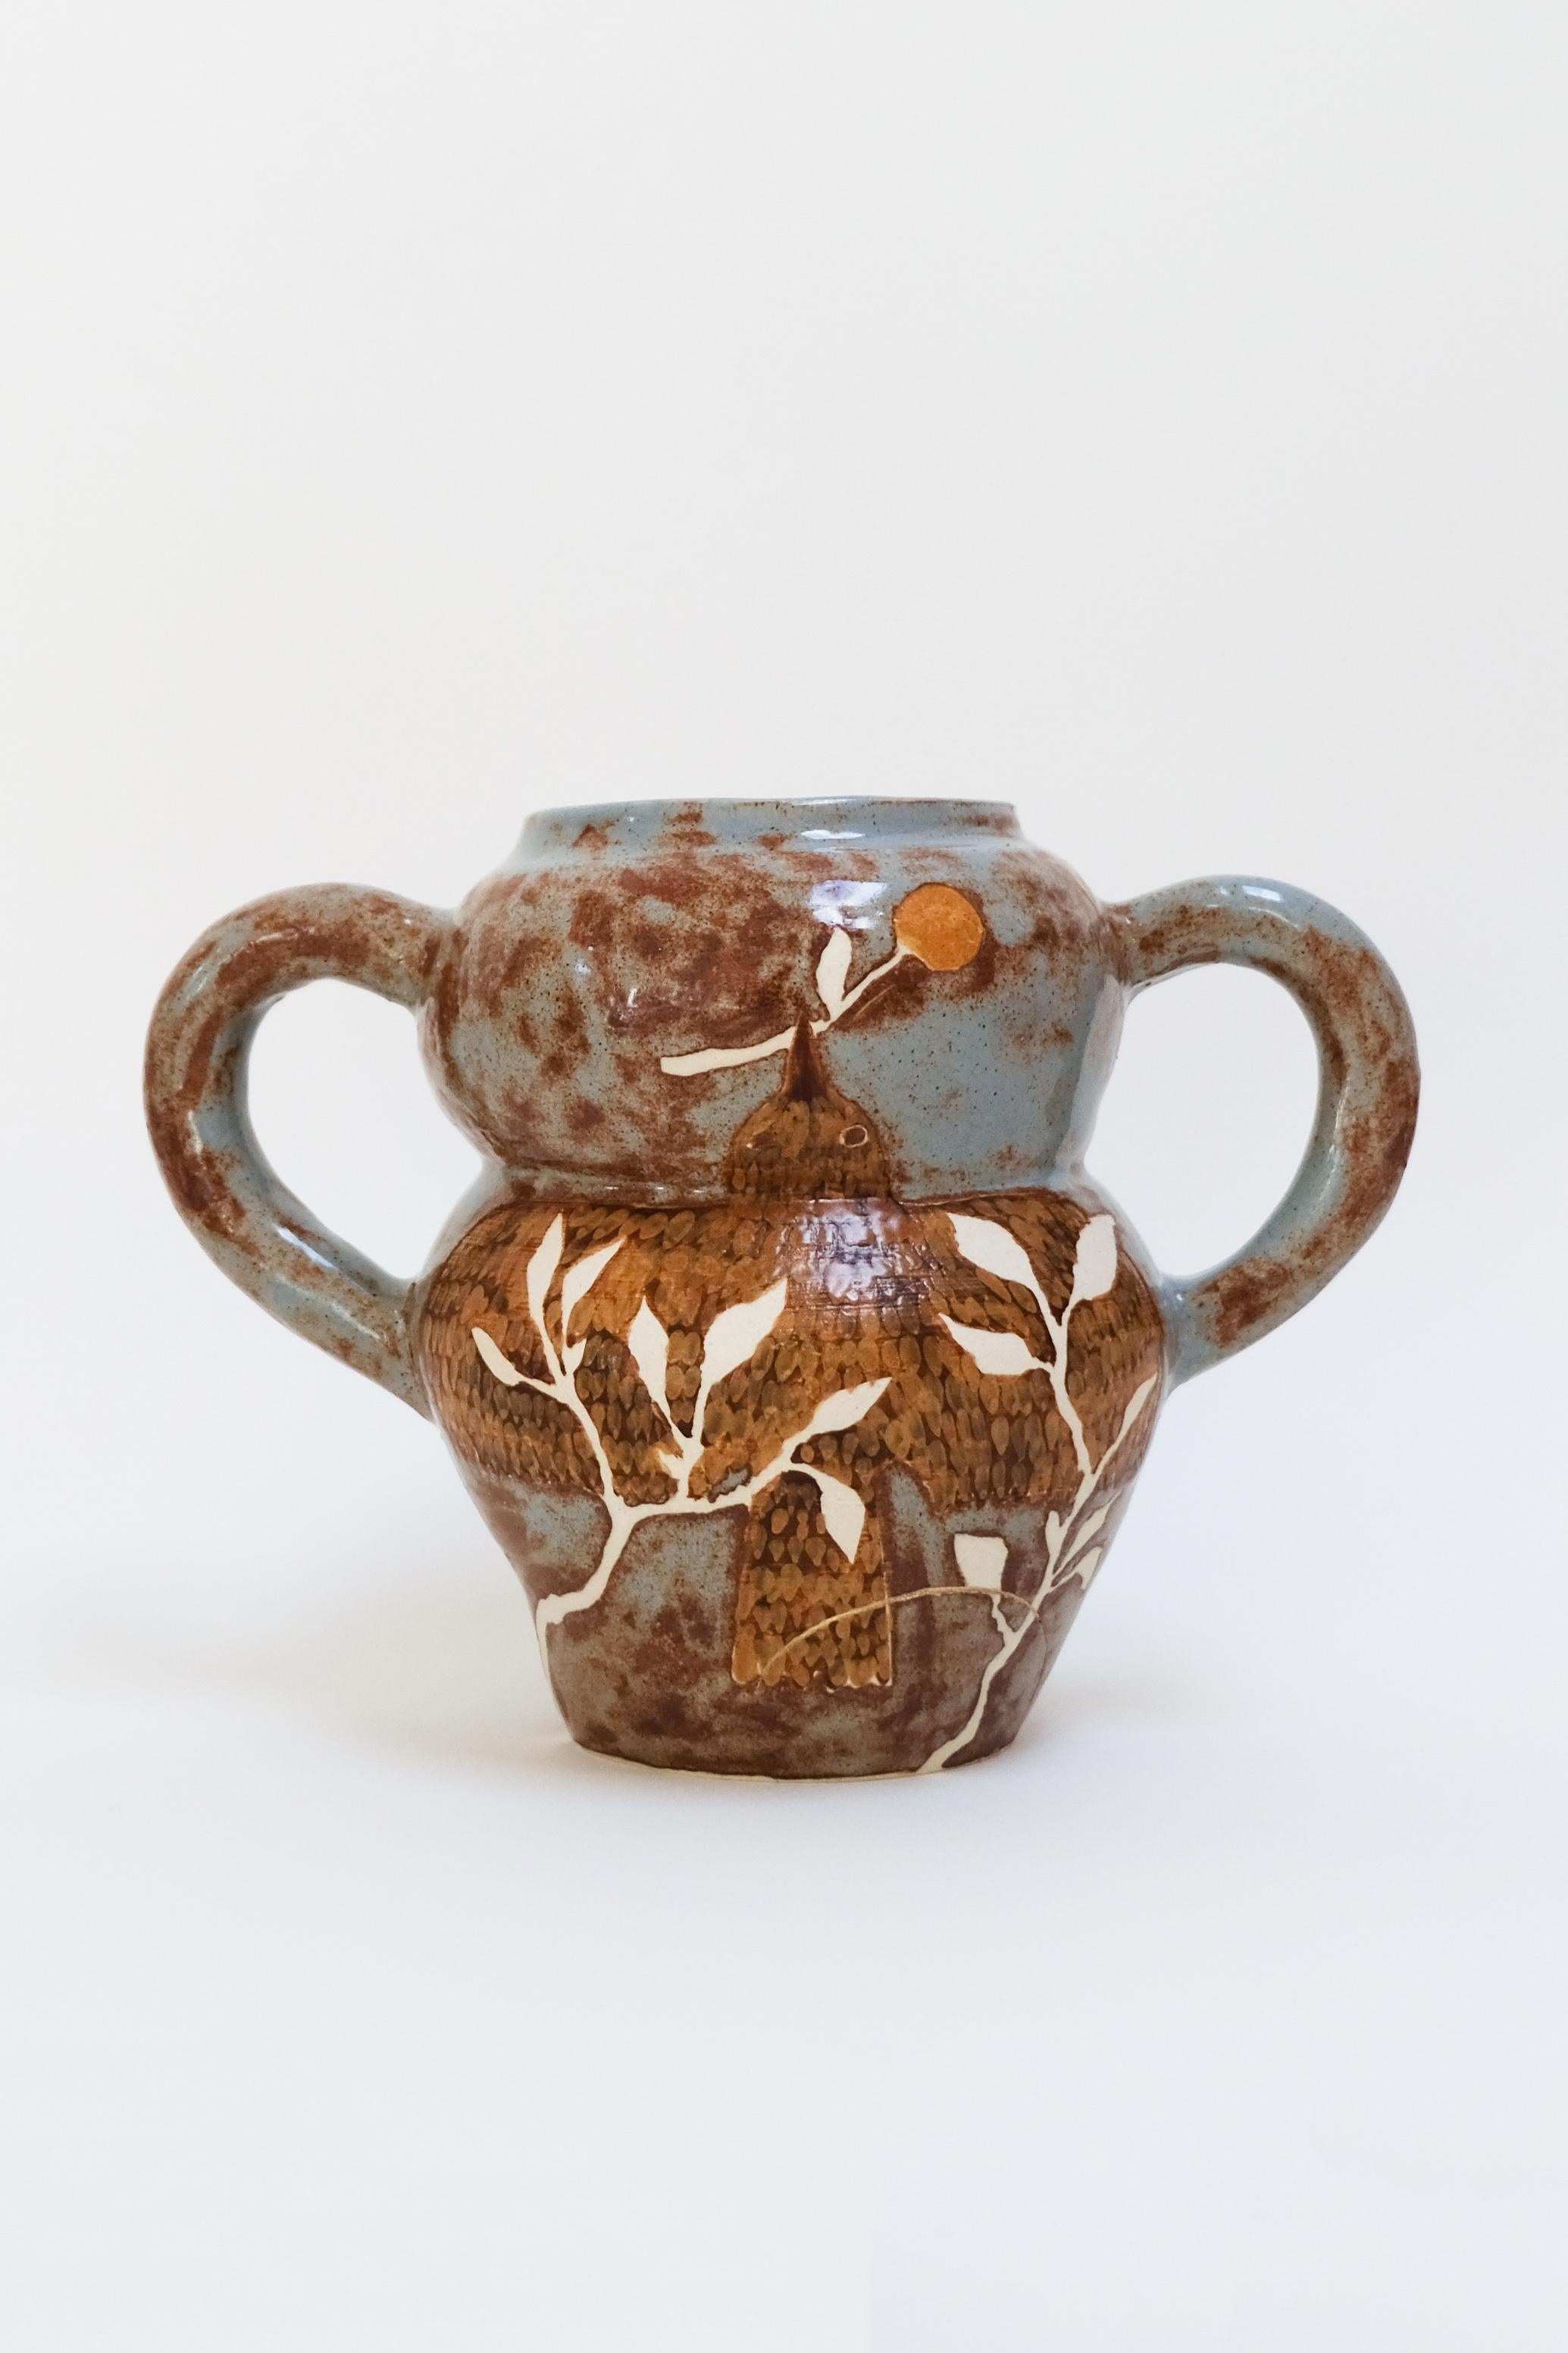 Messenger - contemporary warm botanical bird, handled ceramic vase, functional For Sale 3